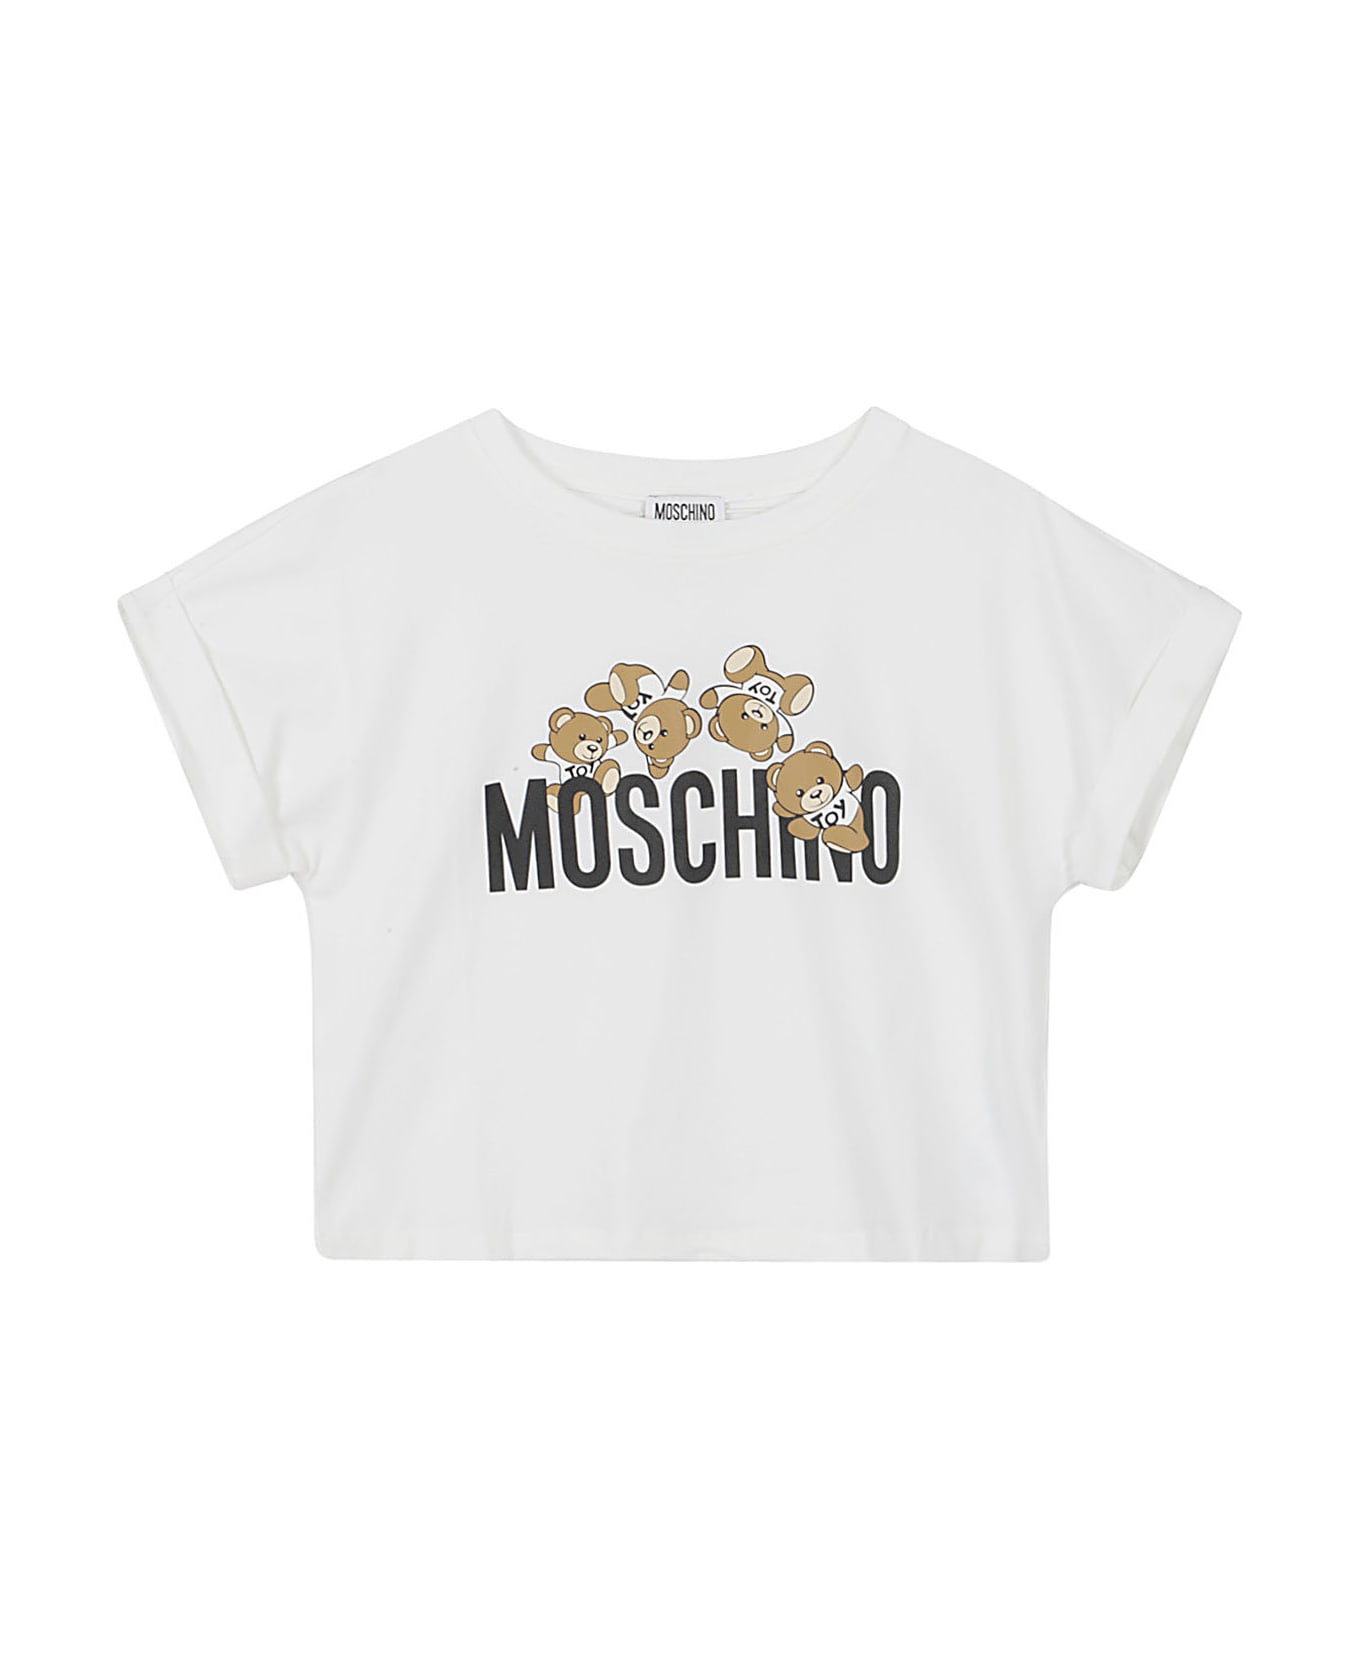 Moschino Tshirt Addition - White